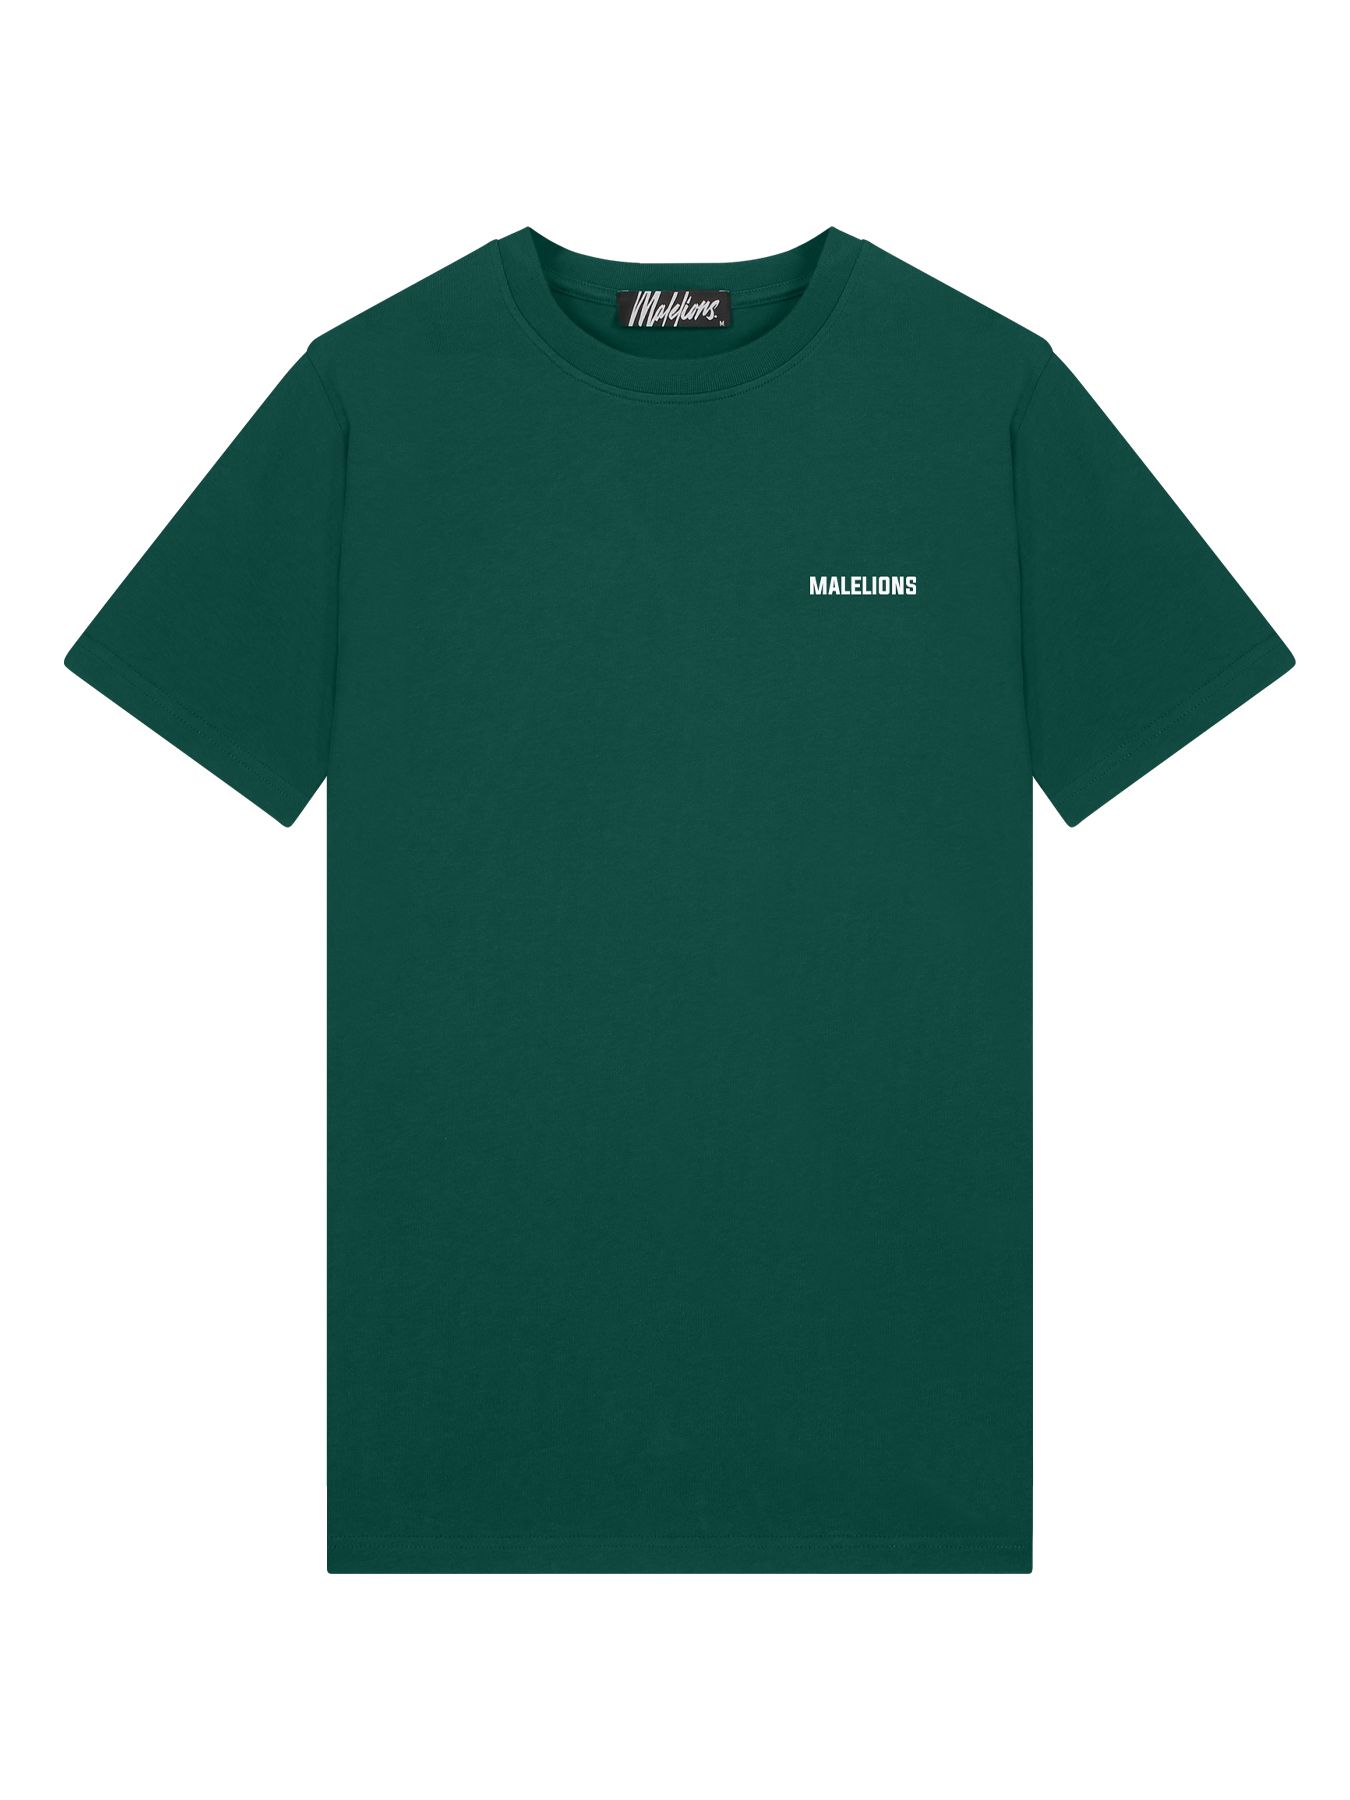 Malelions M3-ss23-09 T-shirt dark green 00103897-G5